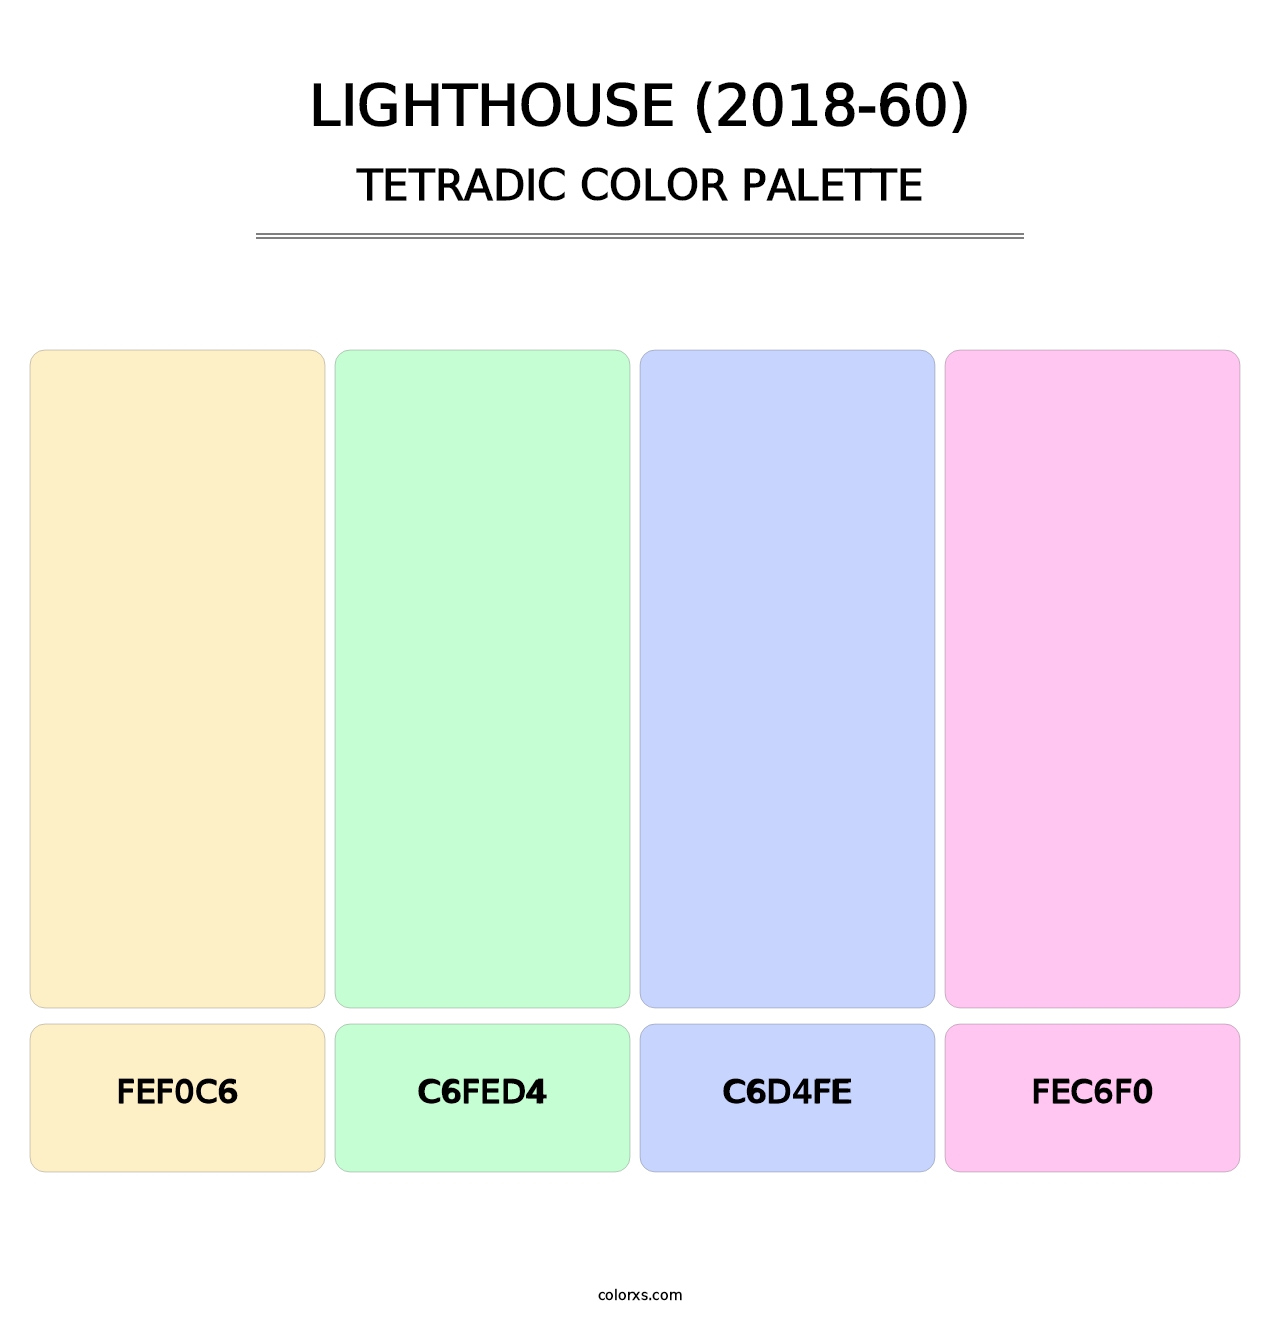 Lighthouse (2018-60) - Tetradic Color Palette